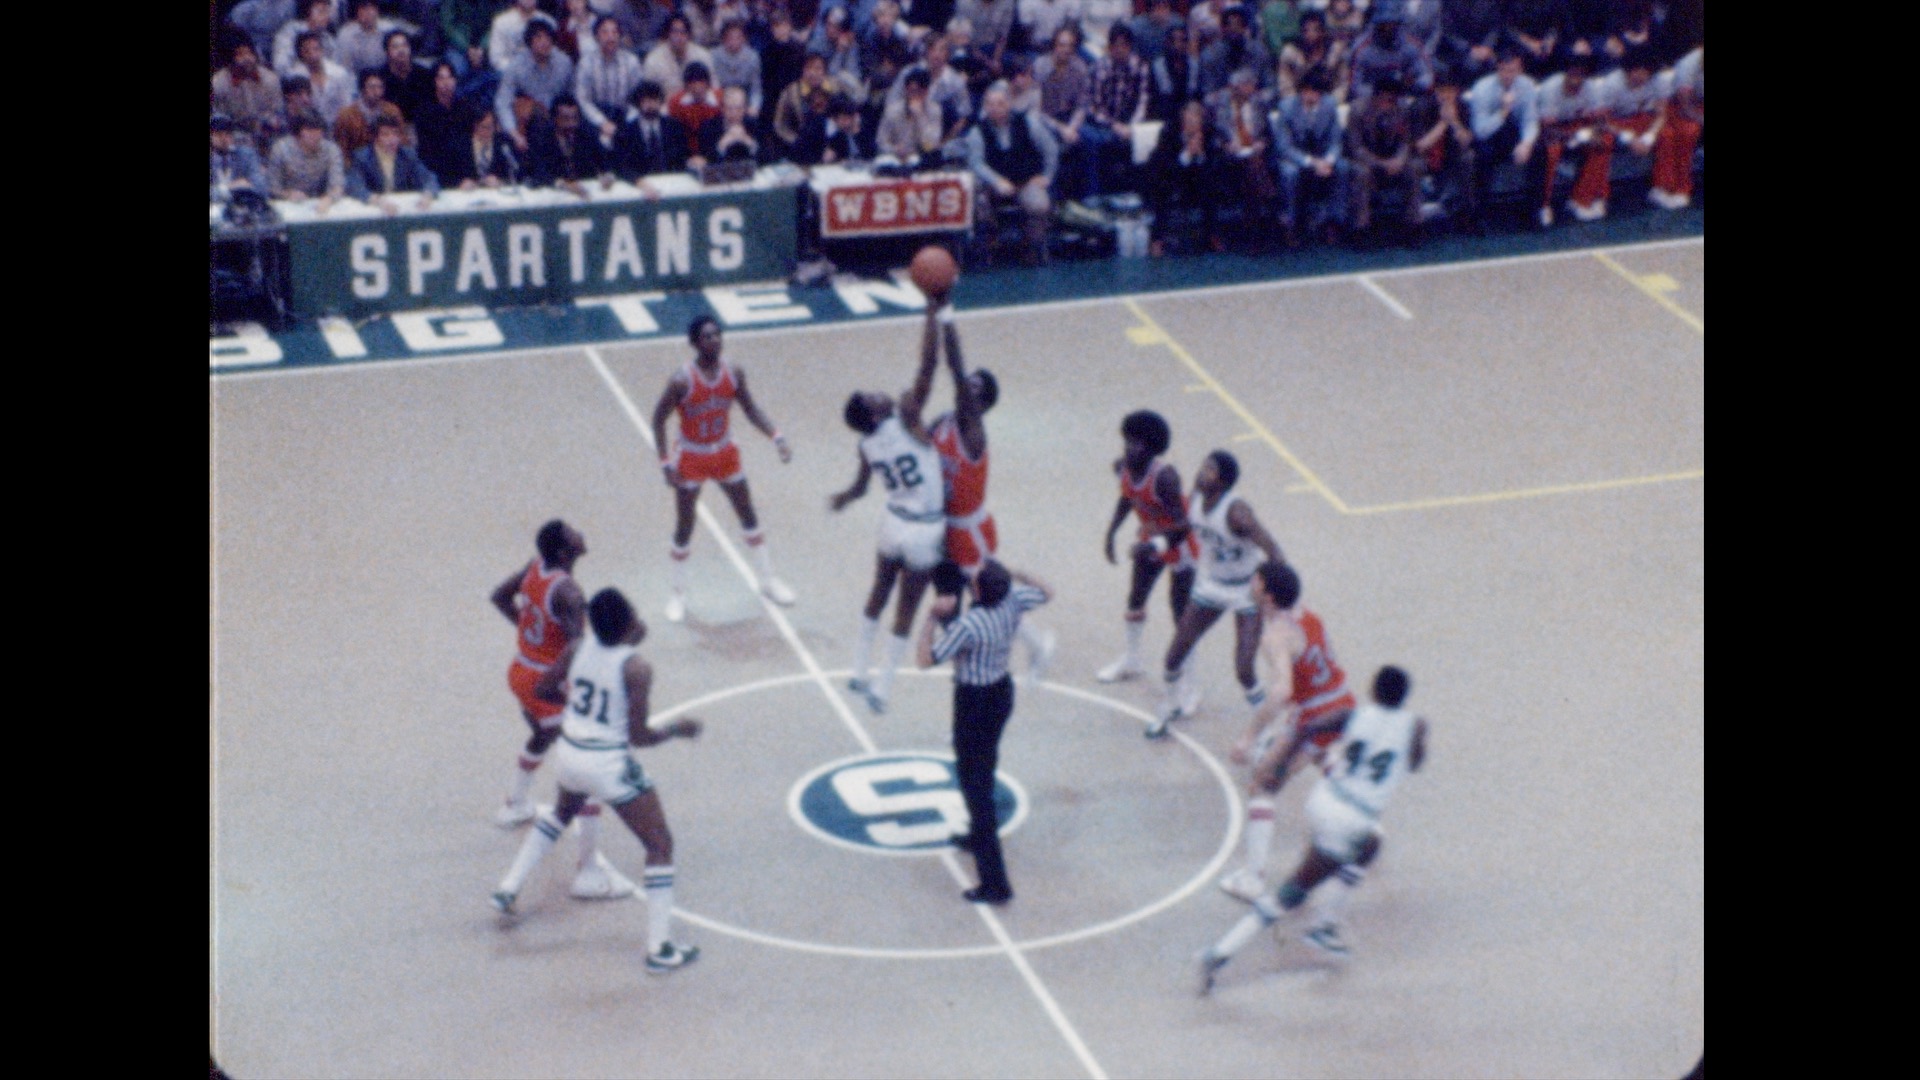 MSU Basketball vs. Ohio State (home), 1978